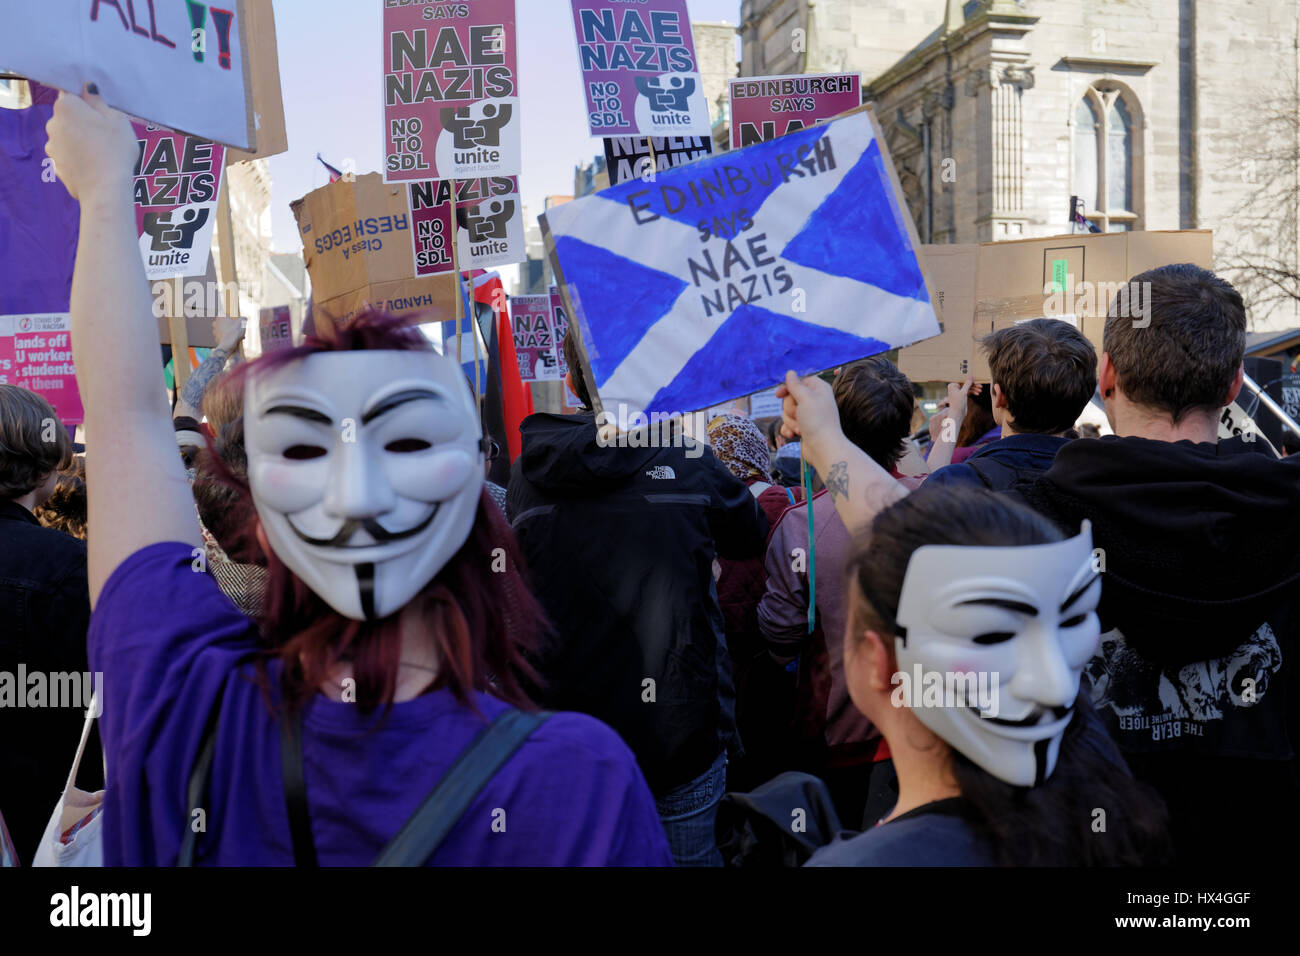 Edinburgh, Scotland, 25th March Protesters gather in Edinburgh with anti-Nazi stance to counter demo White Pride March © Gerard Ferry/Alamy Live News Stock Photo